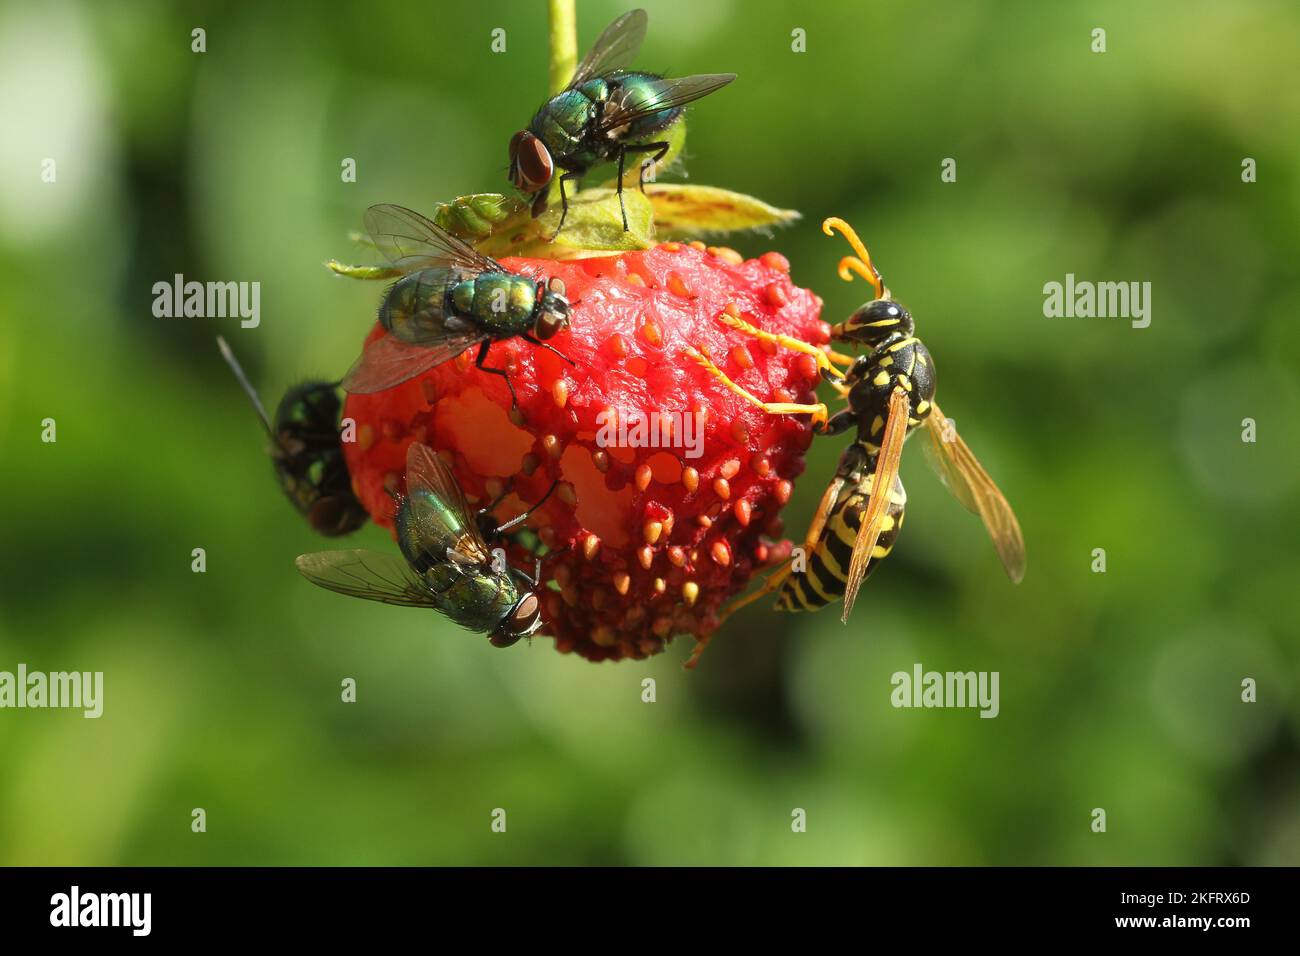 Common green bottle flies (Lucilia sericata) and social wasp (Vespidae) snacking on ripe strawberry, Allgäu, Bavaria, Germany, Europe Stock Photo